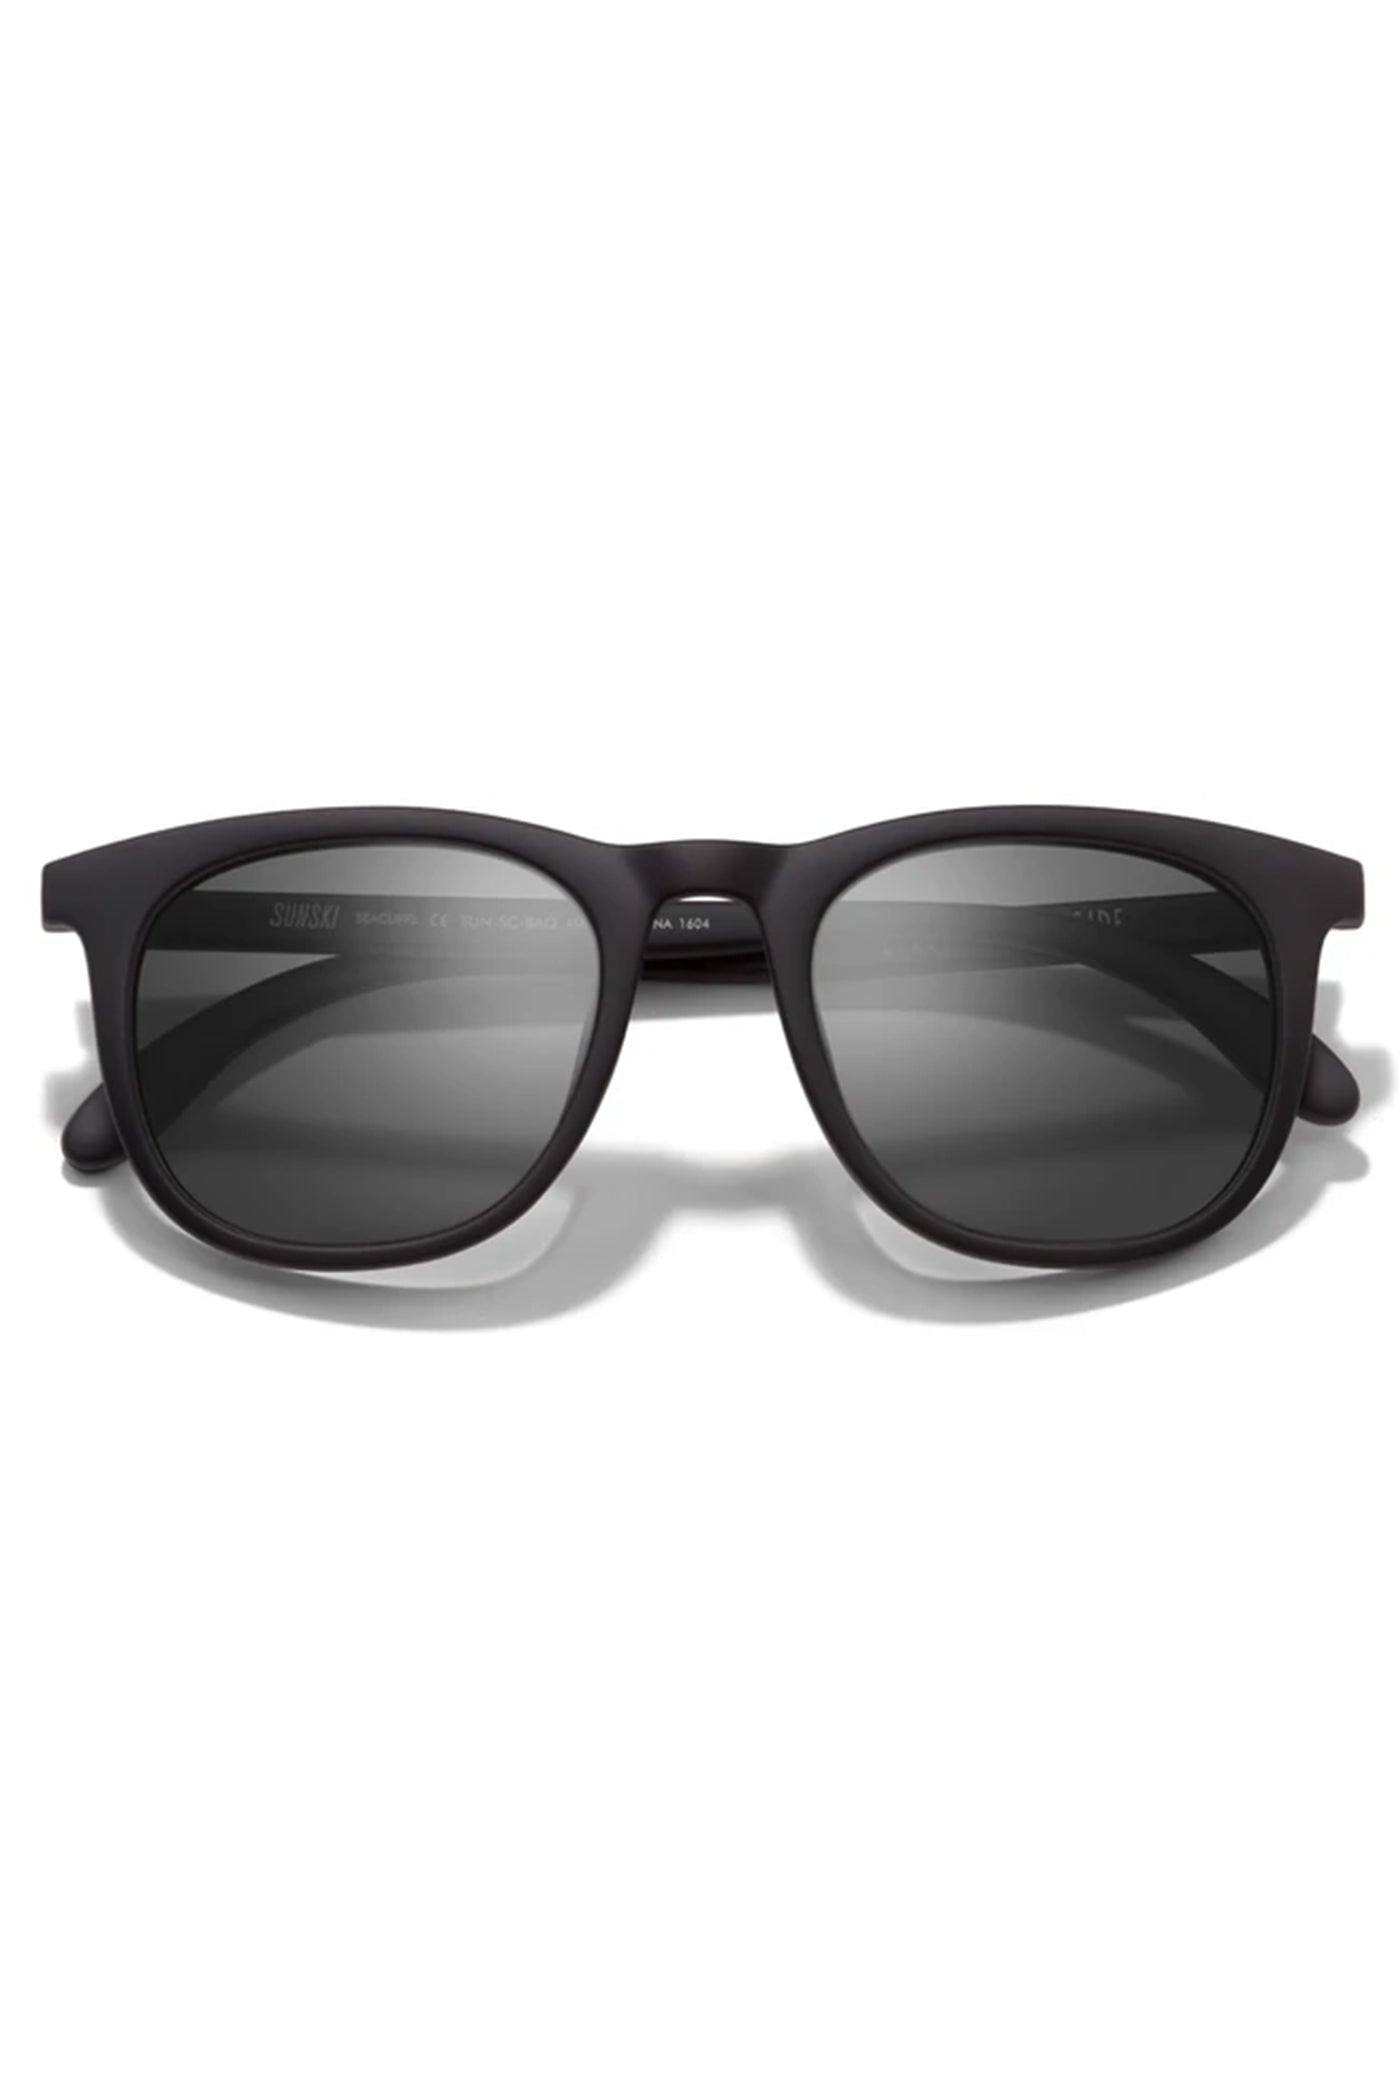 Seacliff Black Slate Sunglasses by Sunski